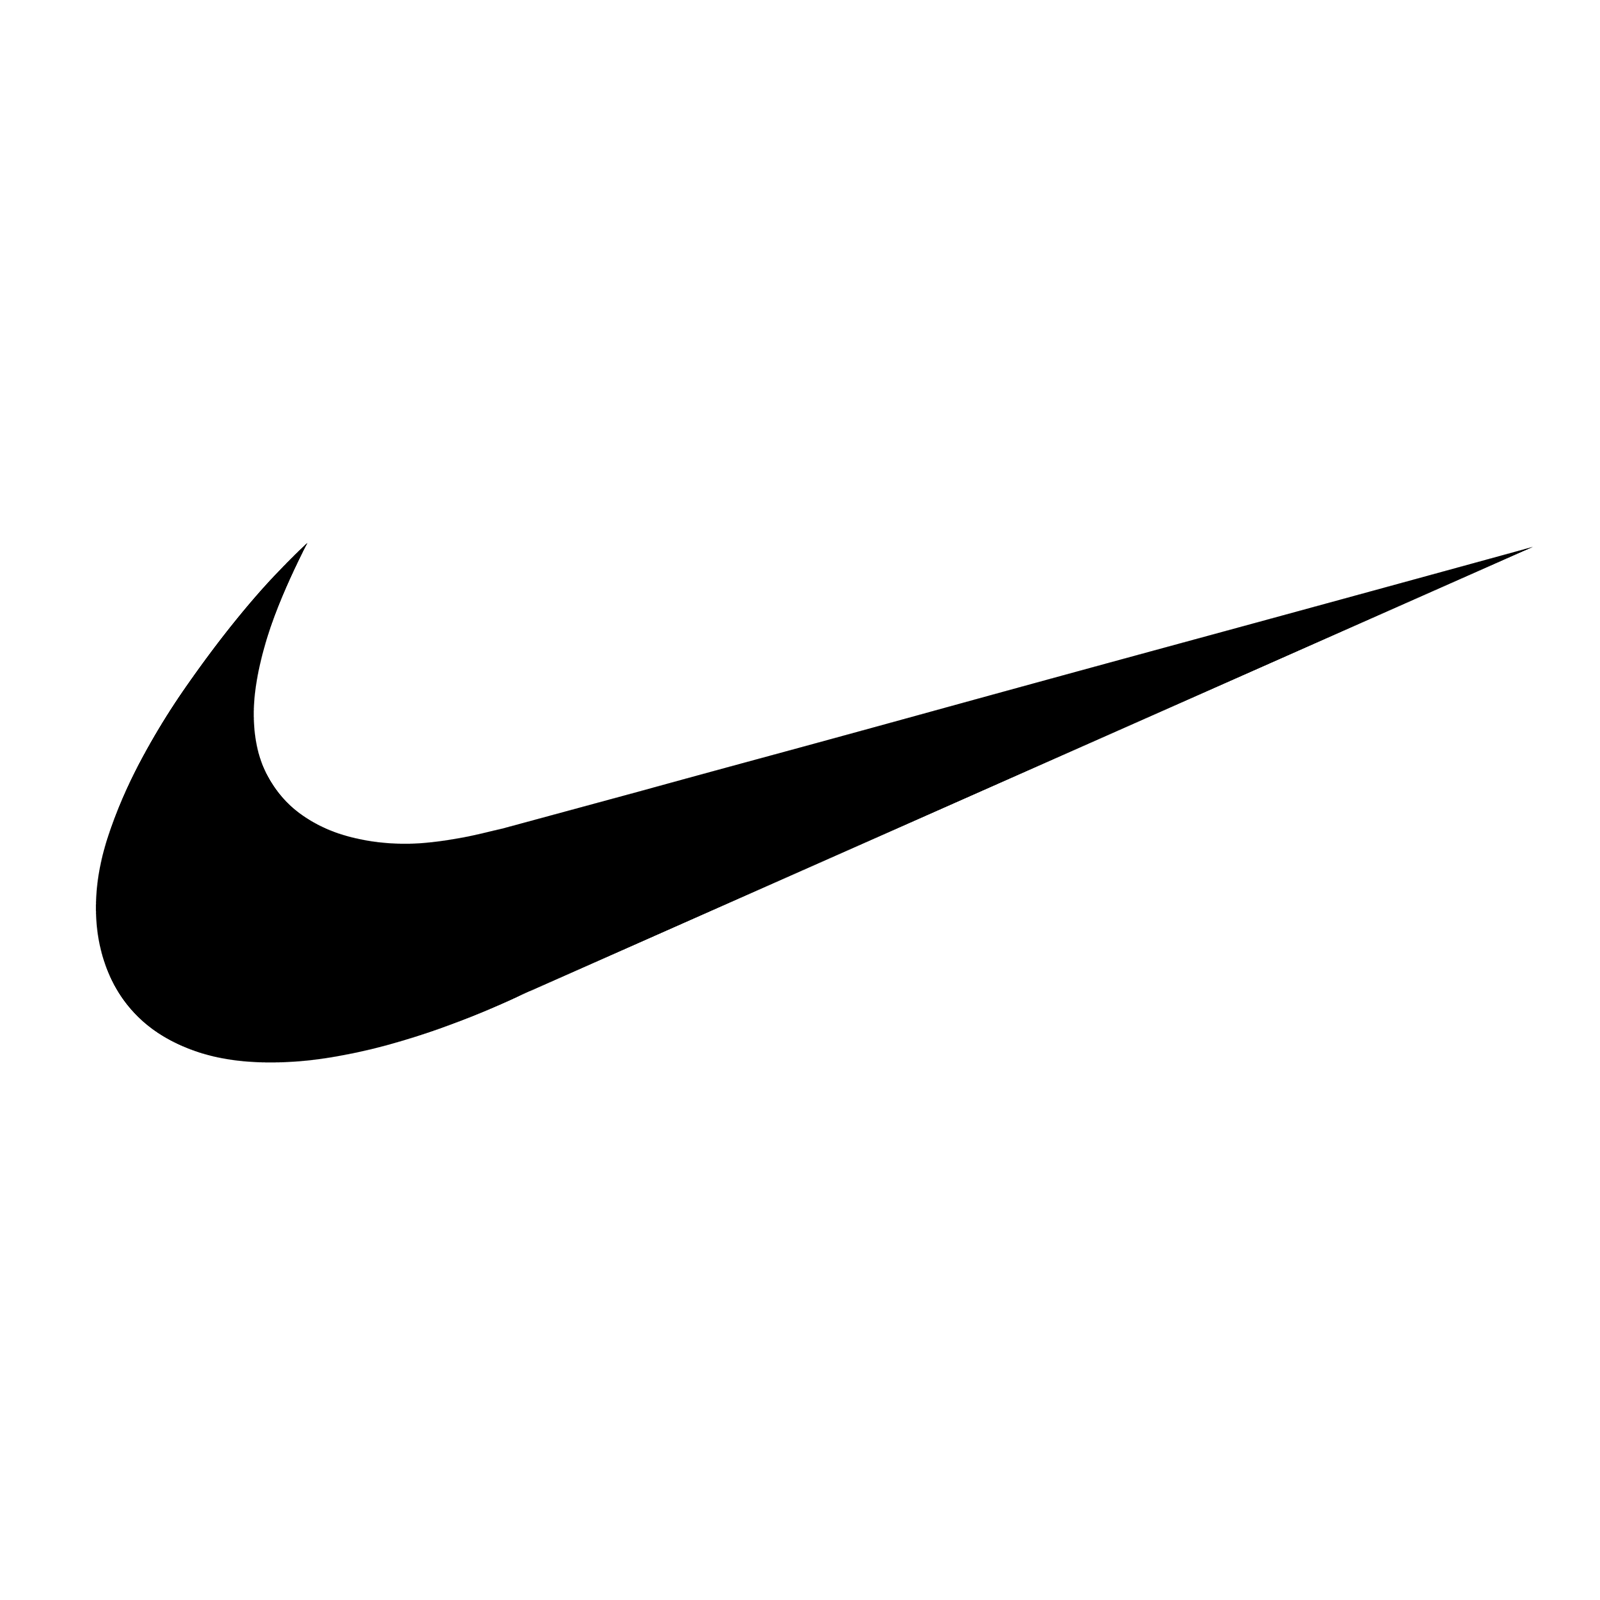 Společnost Nike včera po closing bellu na amerických vydala hospodářské výsledky za Q1 | banka